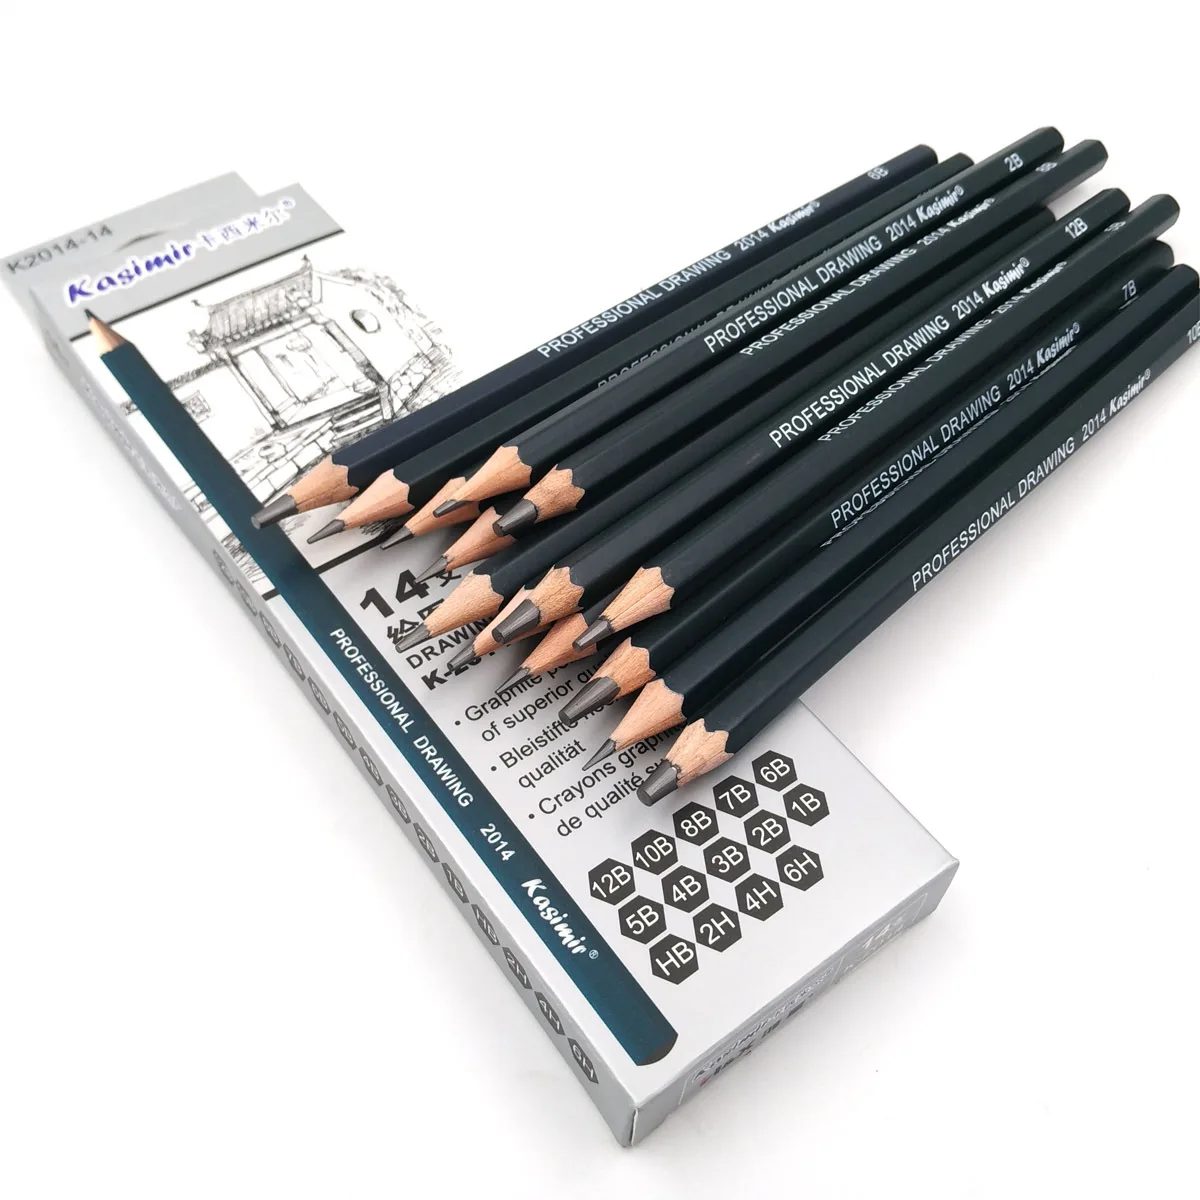 

14pcs/set Professional Wooden Sketch Pencils 12B10B 8B 7B 6B 5B 4B 3B 2B Graphite Art Manual Draw Pen Office School Statione